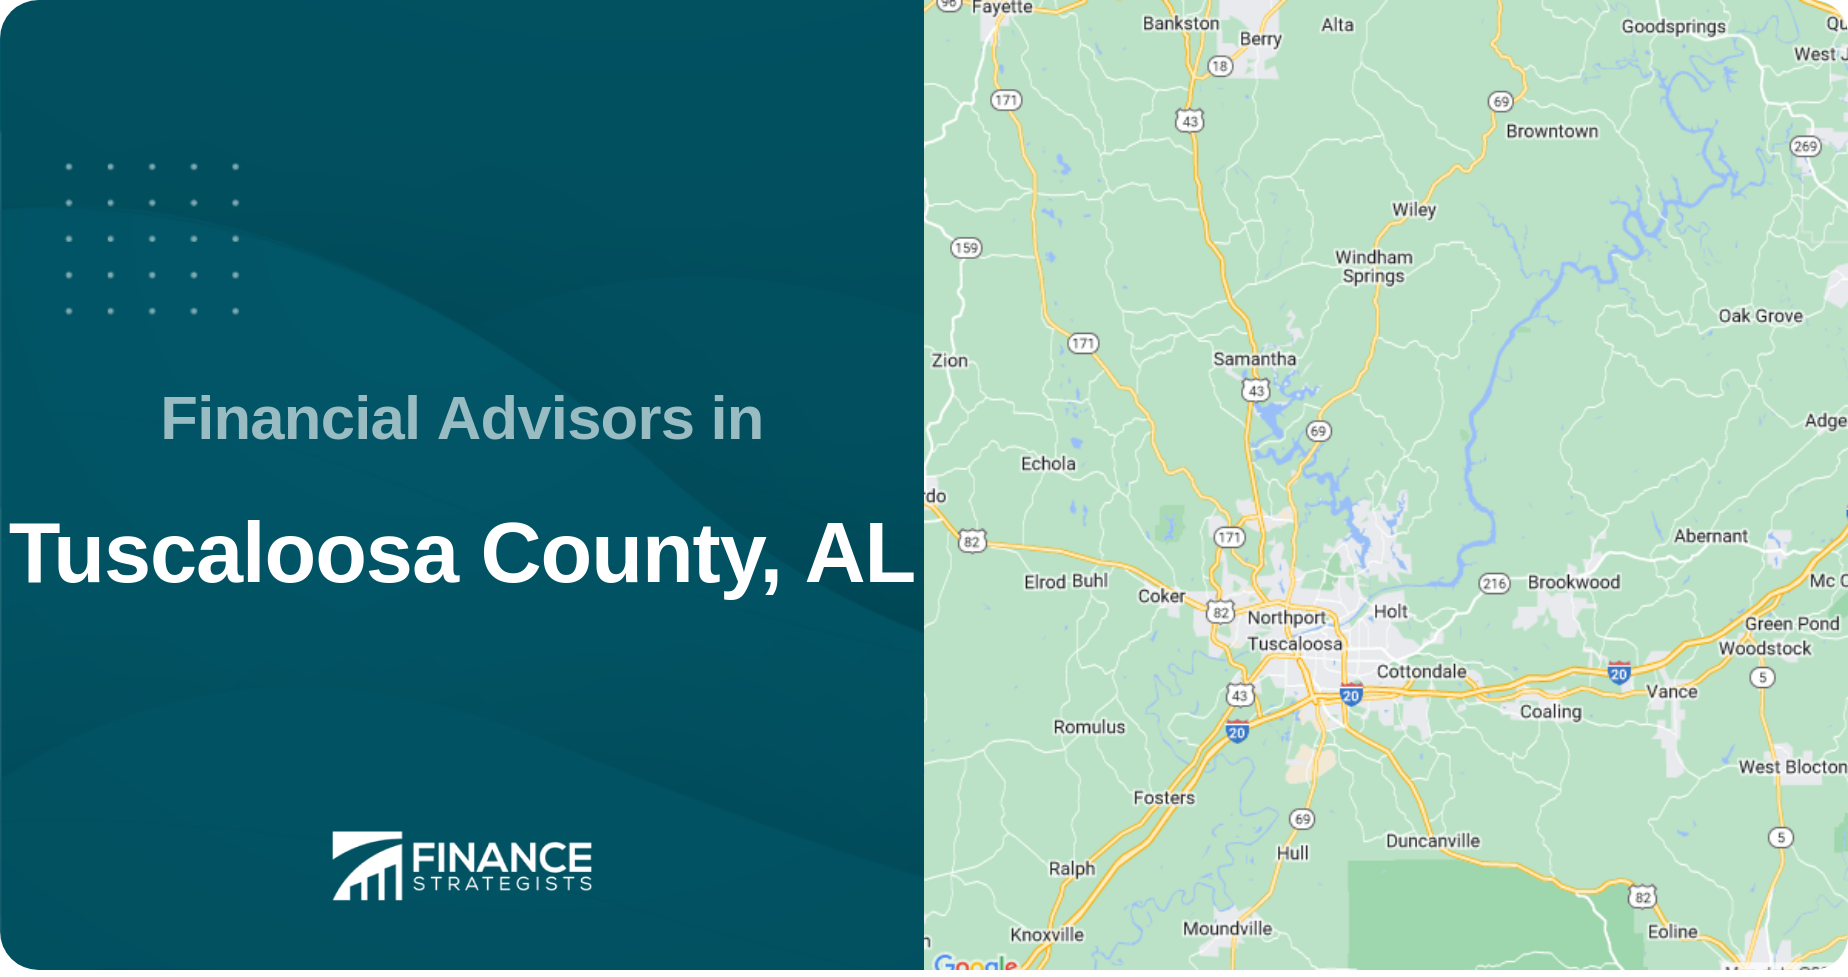 Financial Advisors in Tuscaloosa County, AL